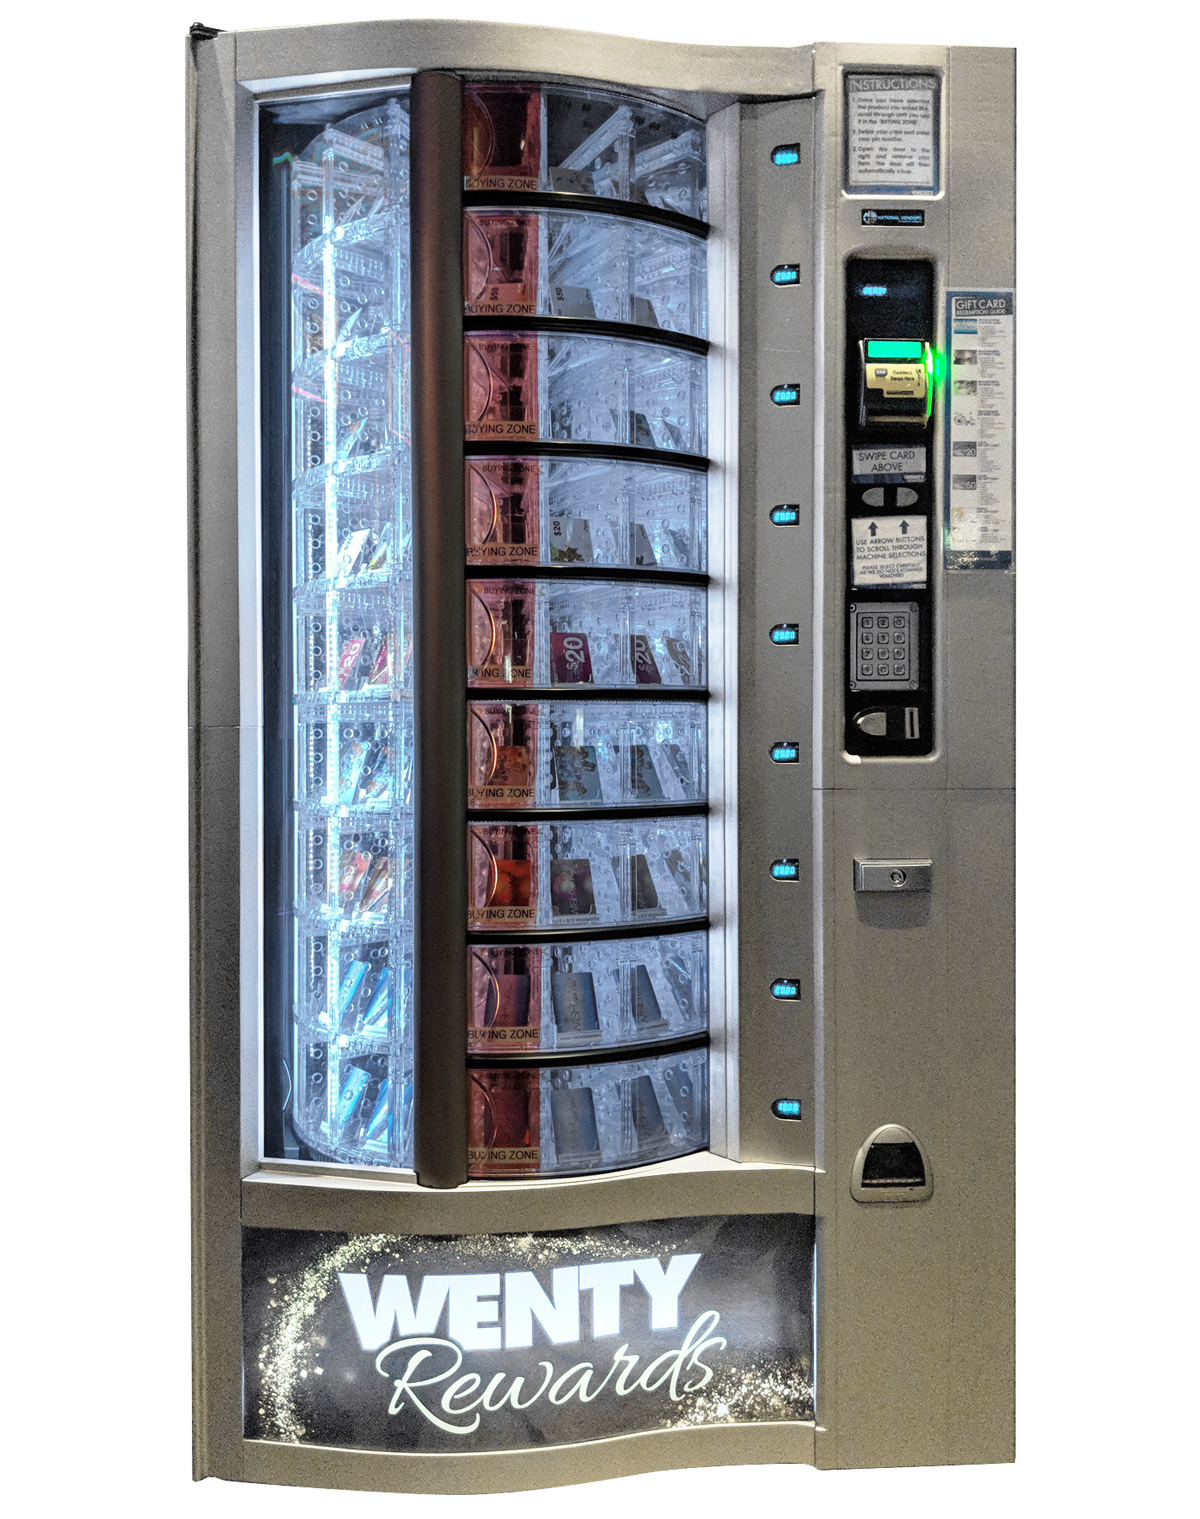 Club Rewards Vending Machines | Automatic Vending Specialists